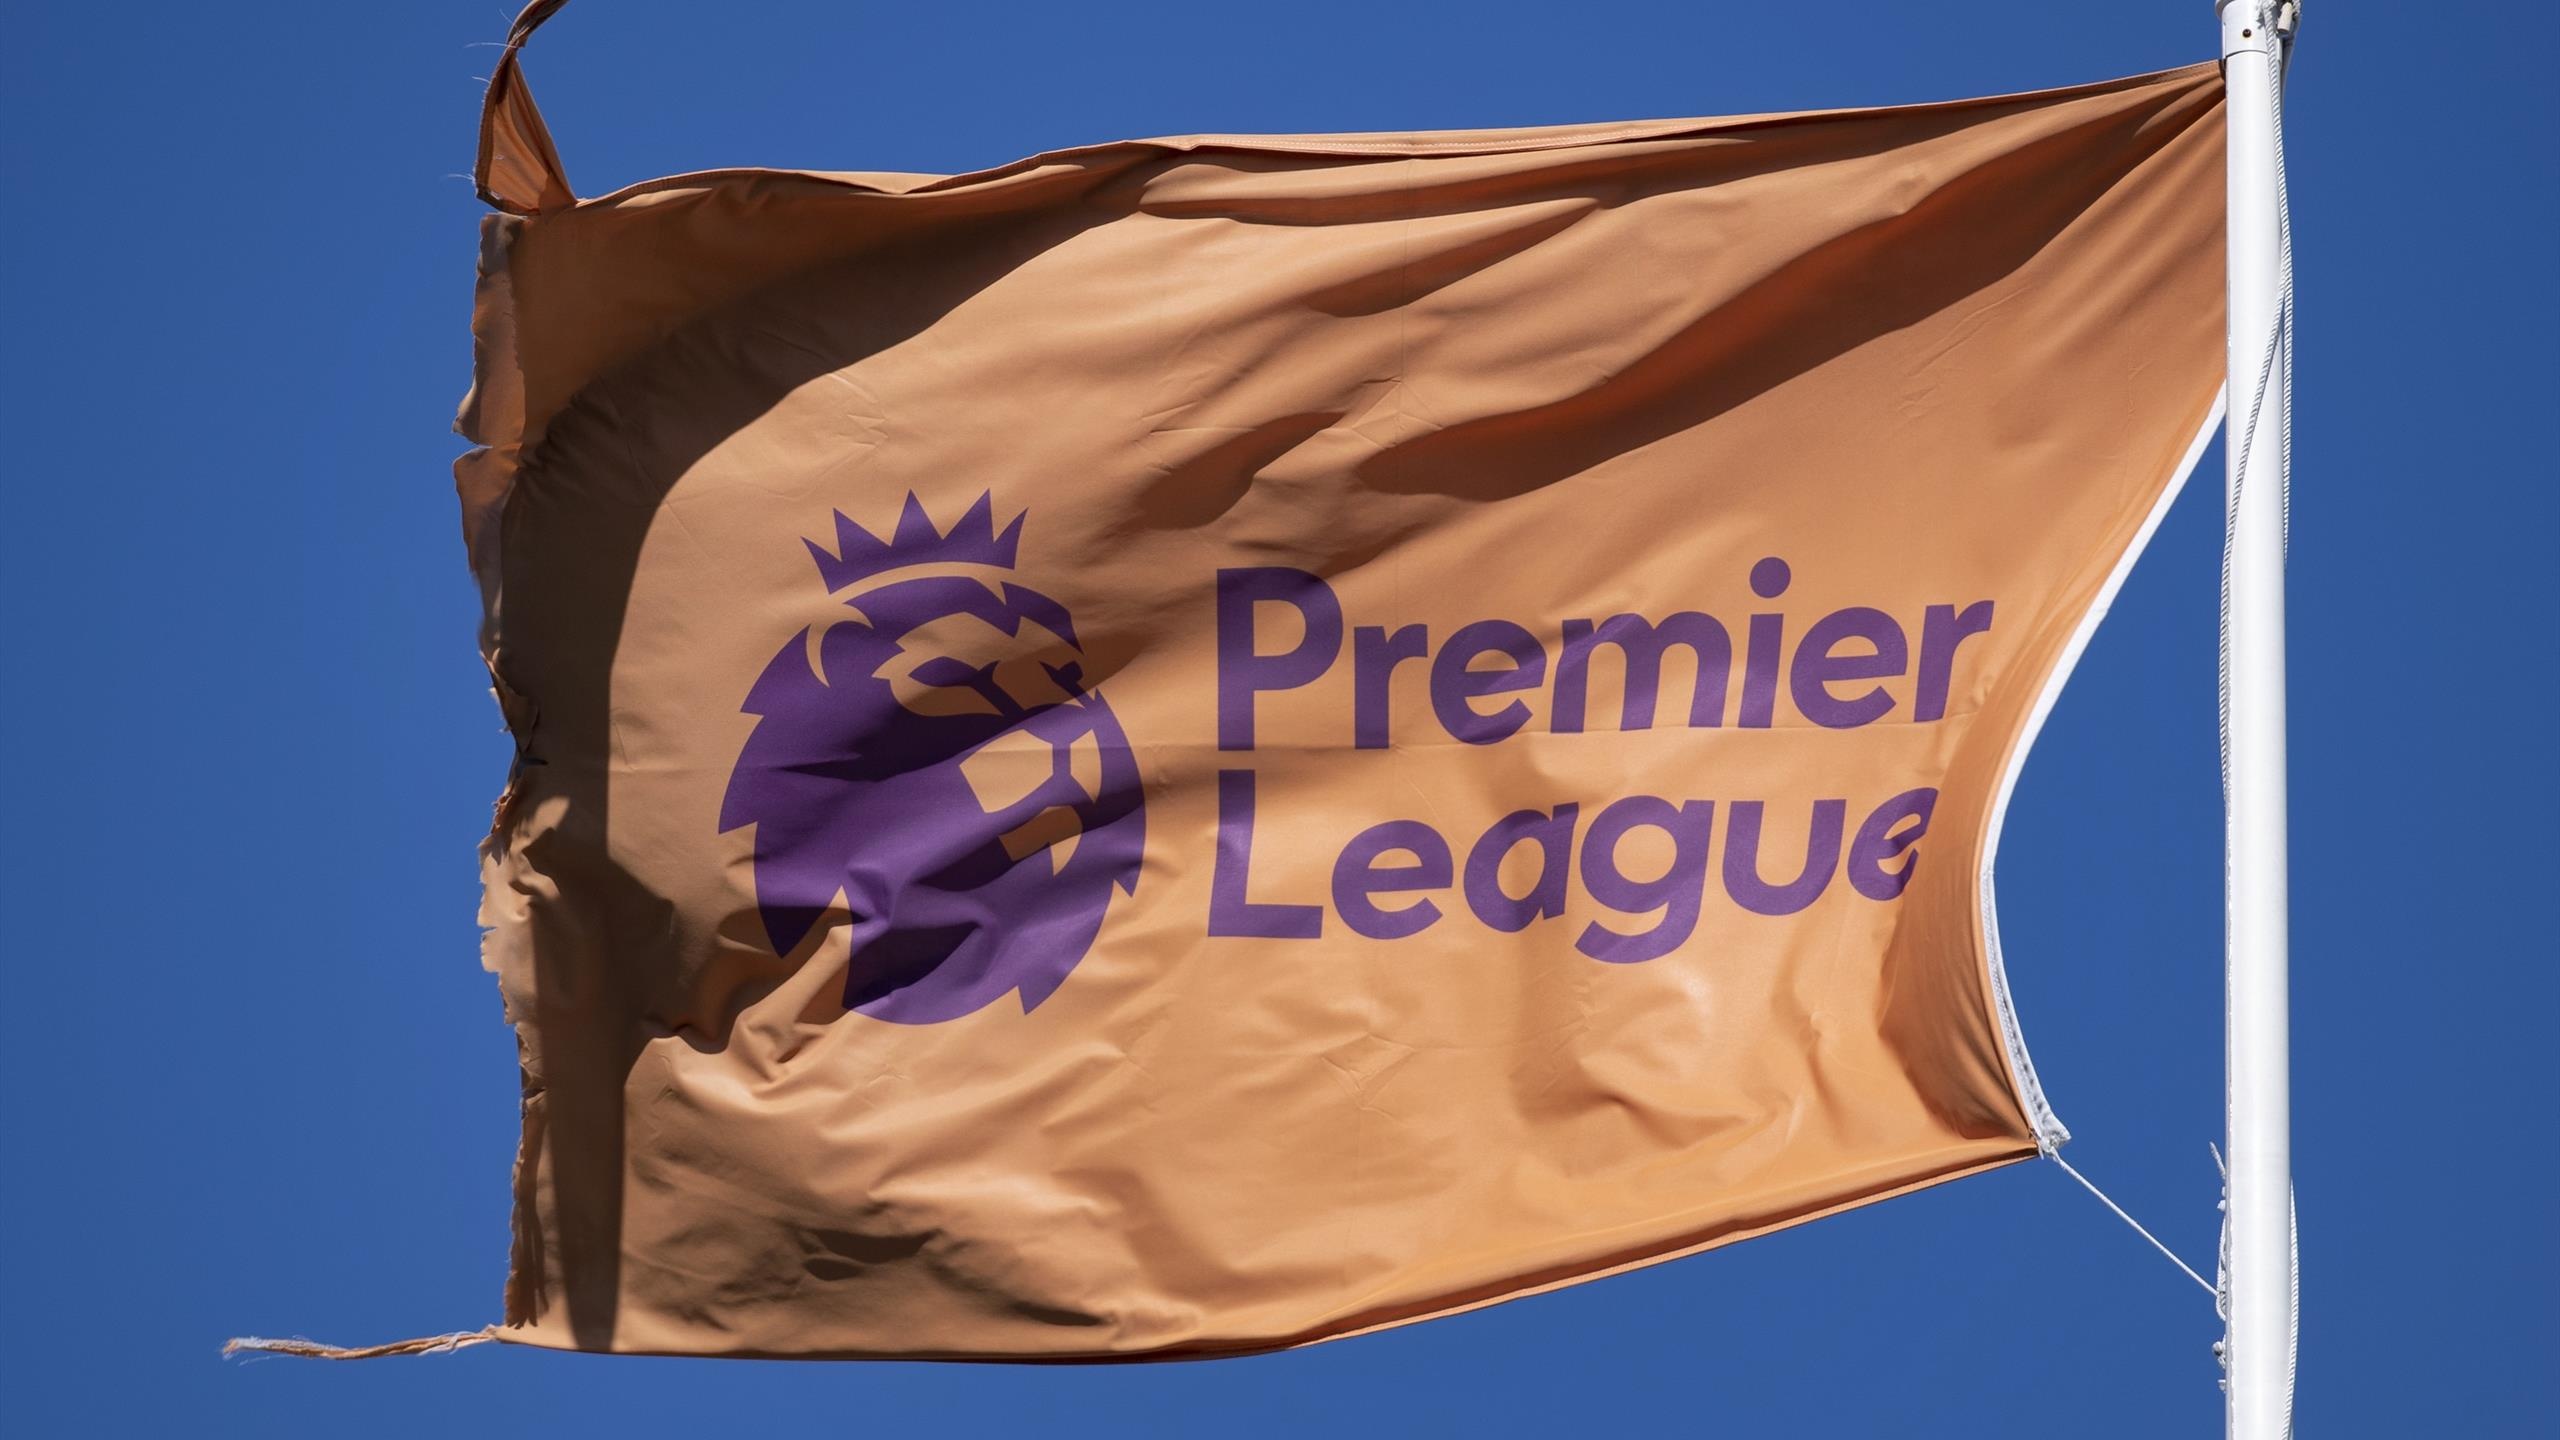 Vòng 7 Premier League có thể bị hoãn.